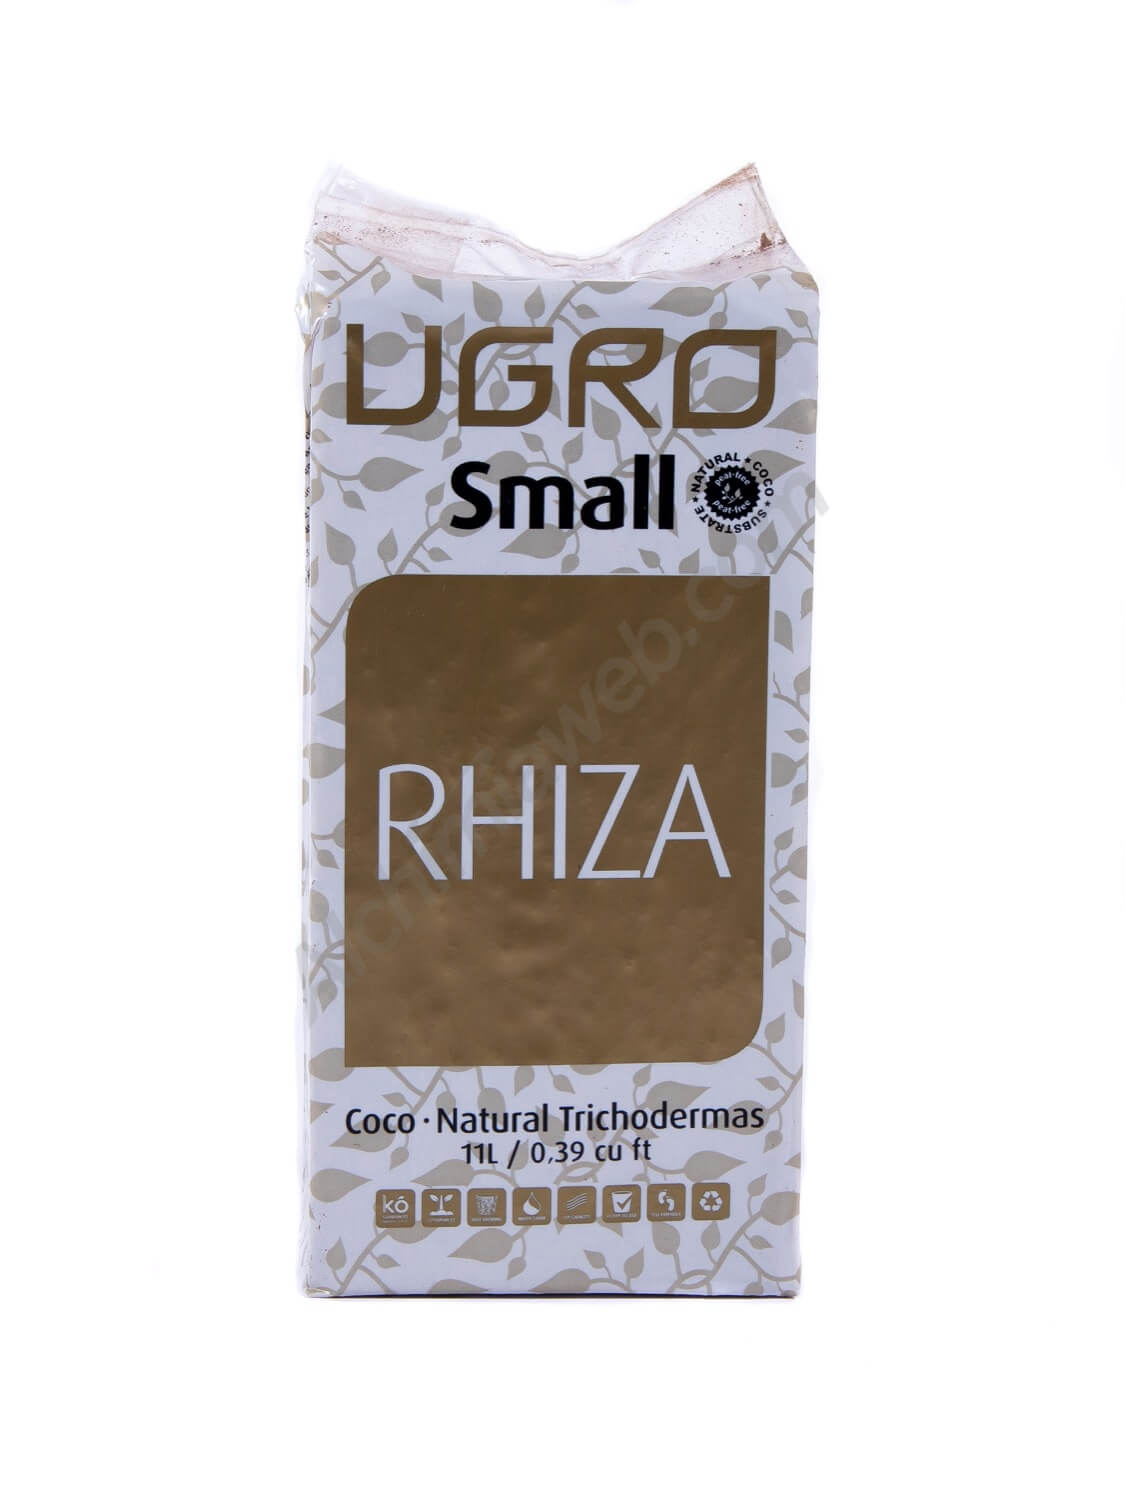 UGro Small Rhiza. Coco prensado con Microrrizas